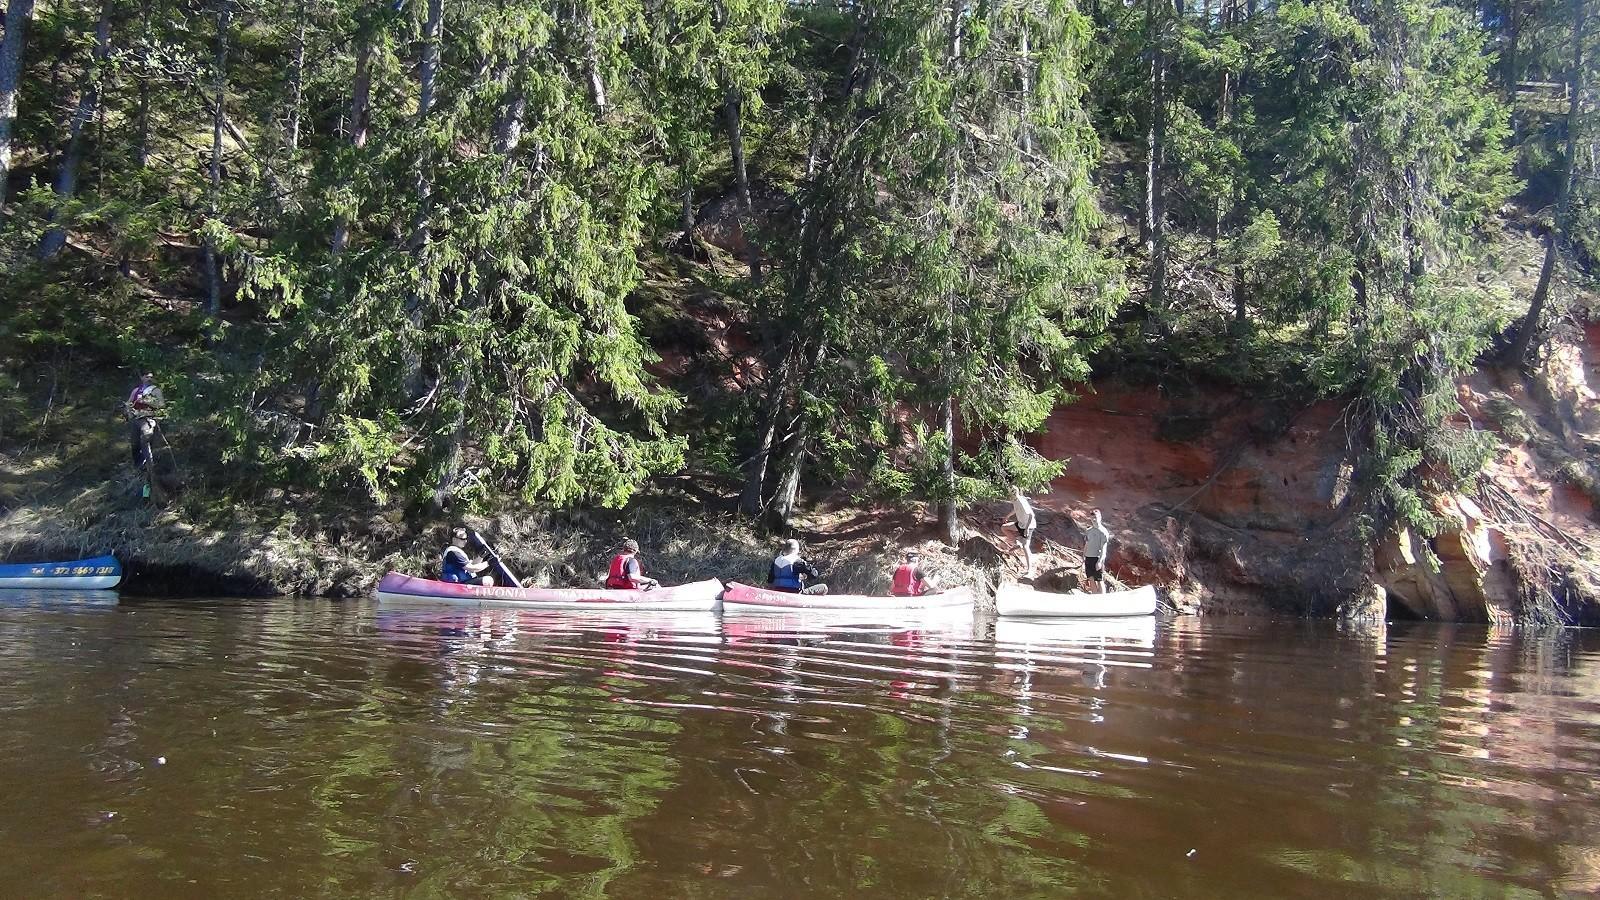 Livonia Matkad unguided multi-day canoe trips on the lovely Salatsi river